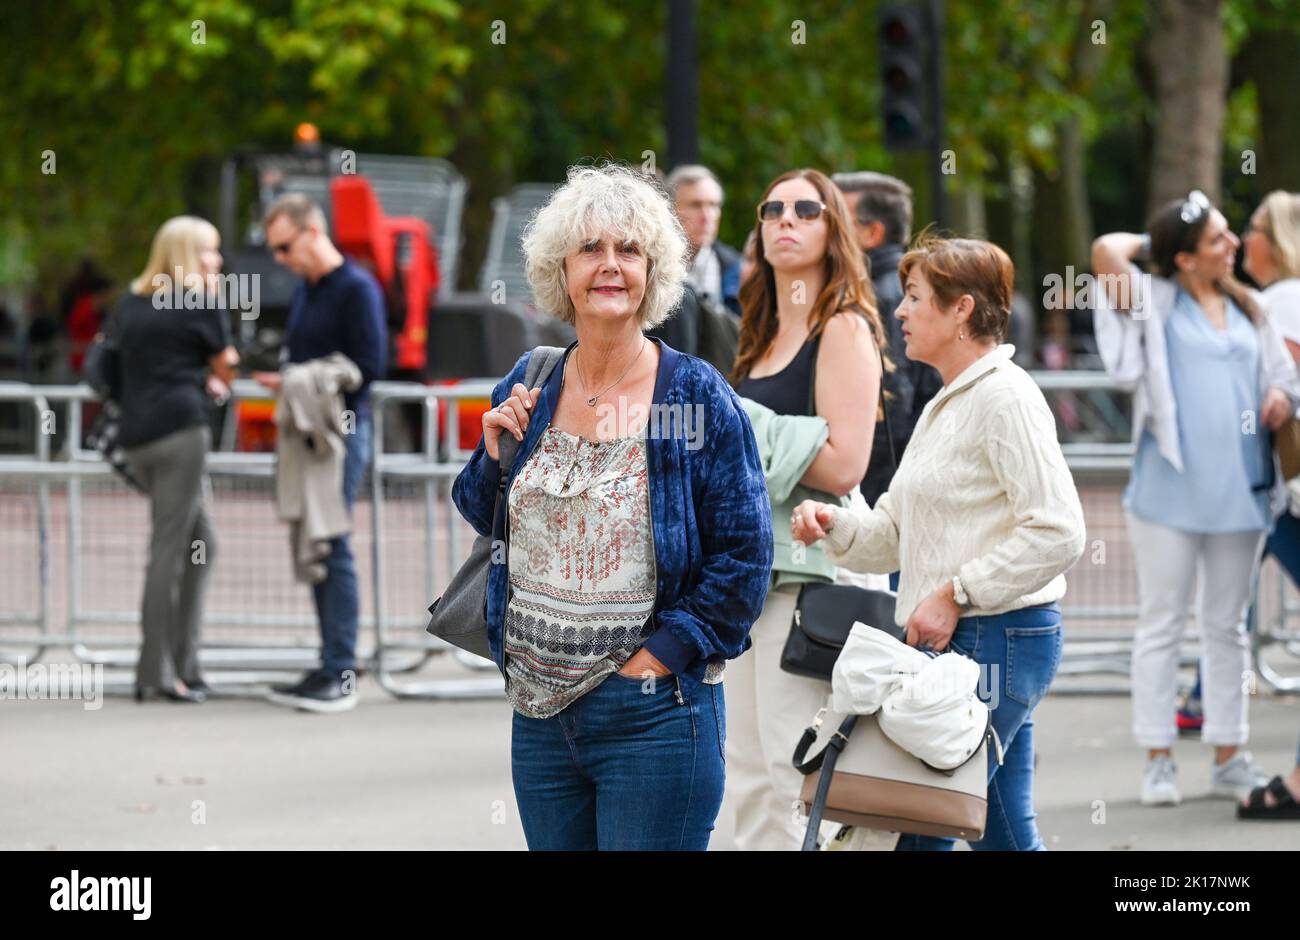 London Views - Mature woman tourist Stock Photo